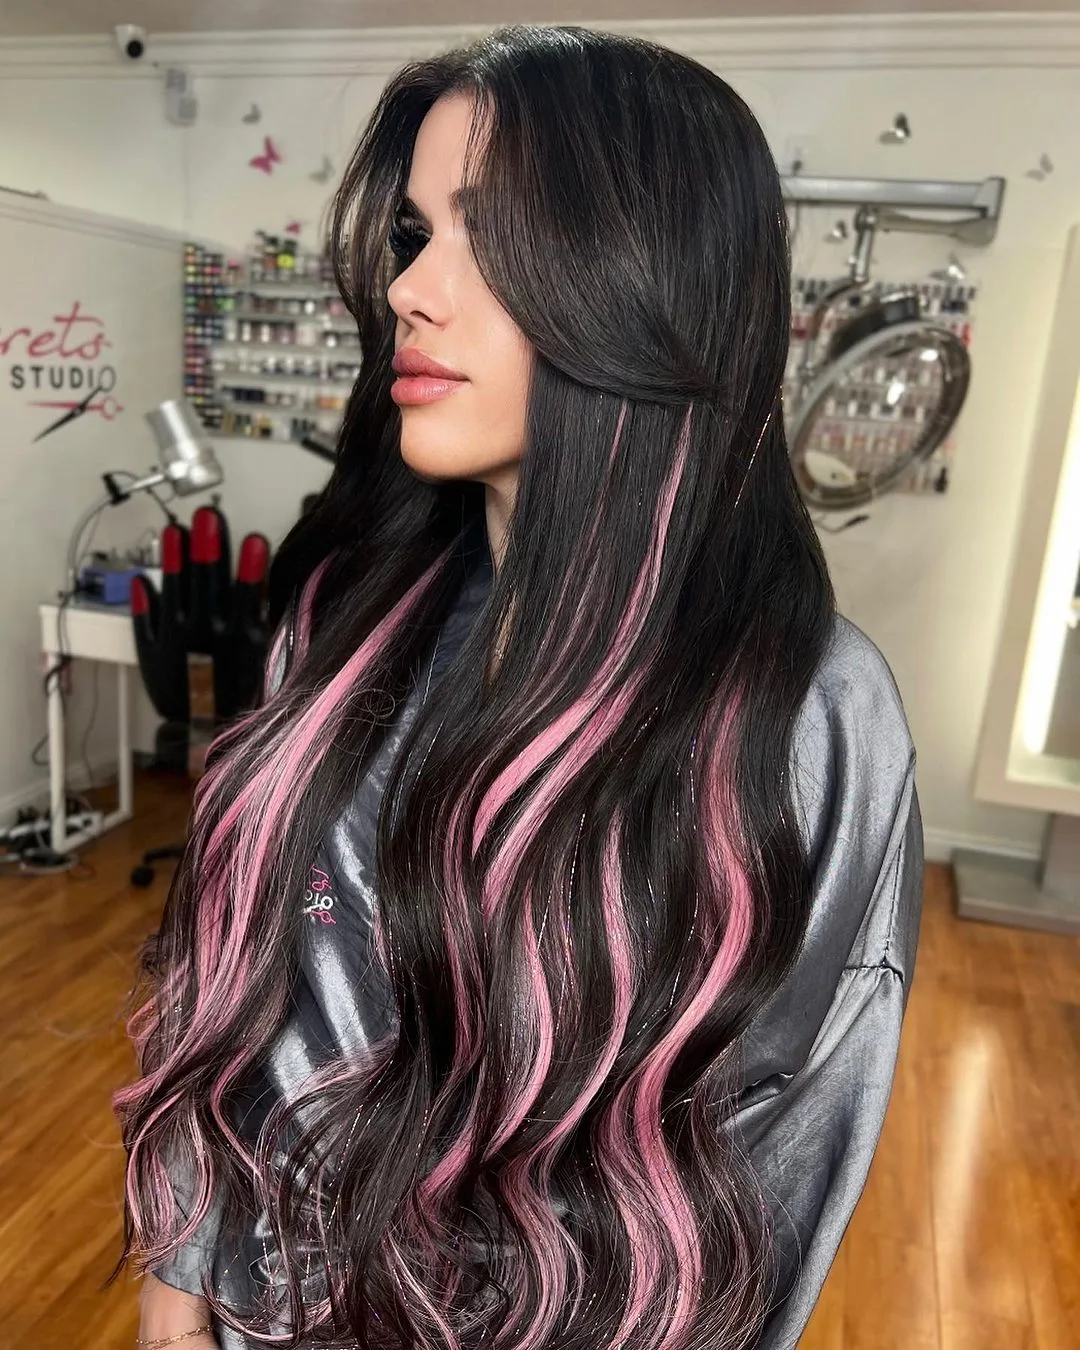 madeixas cor-de-rosa pastel num cabelo preto comprido